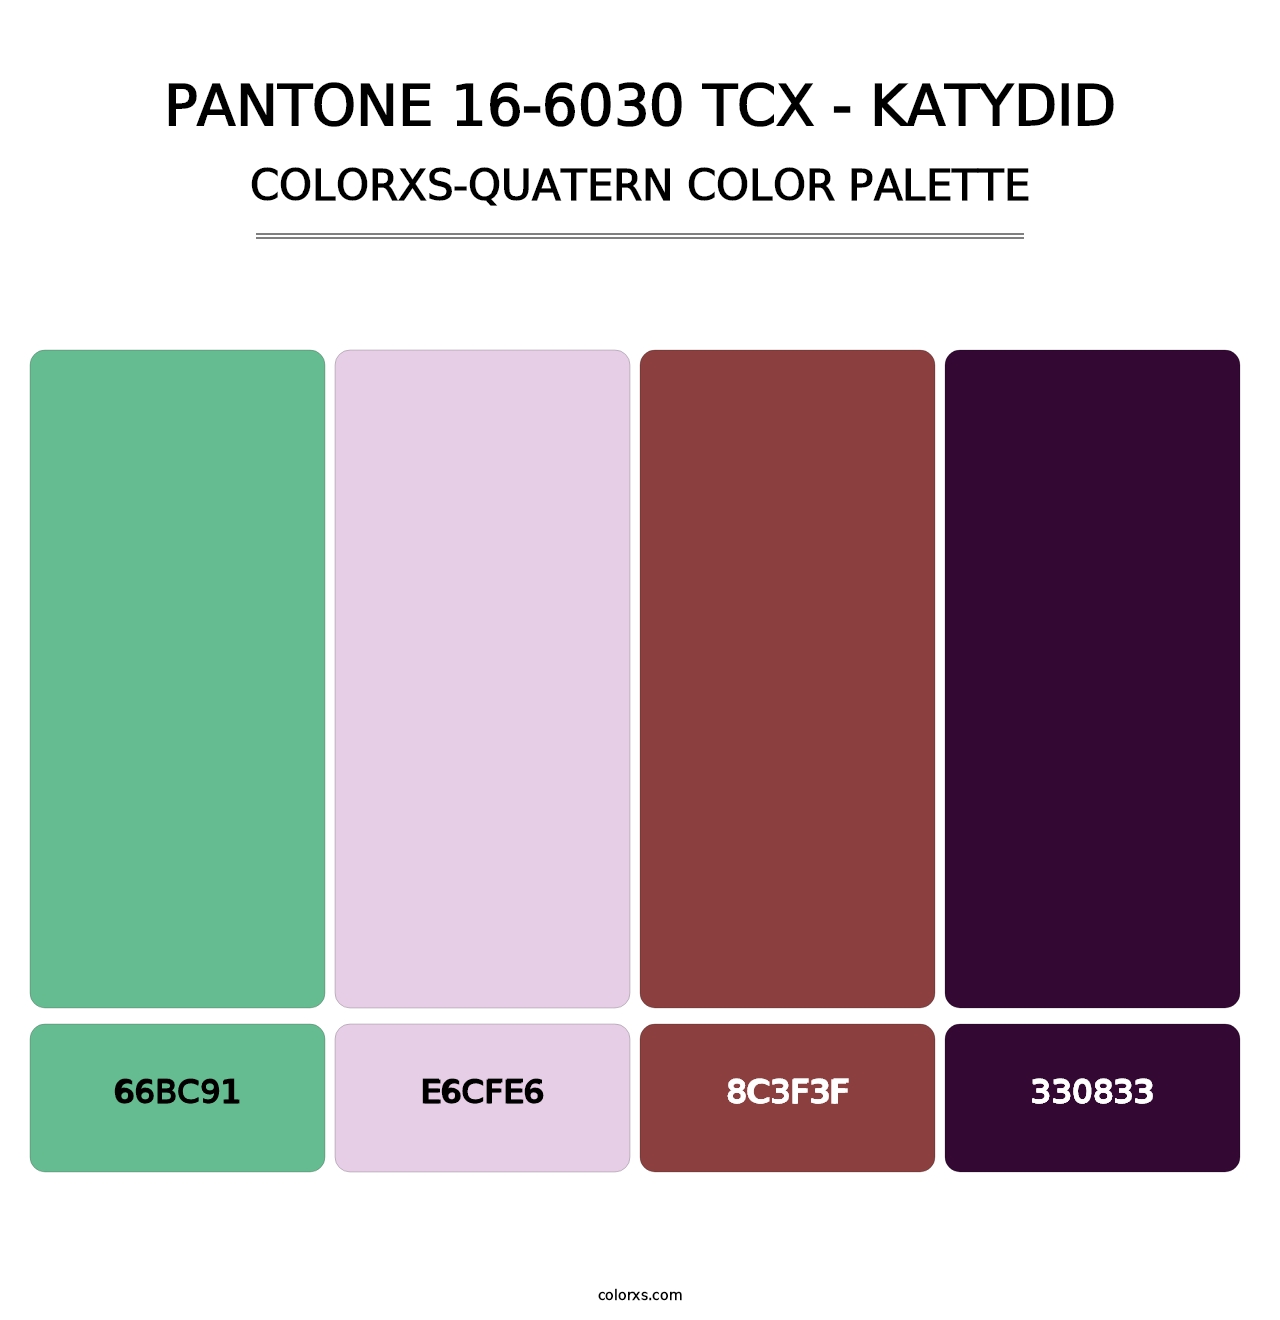 PANTONE 16-6030 TCX - Katydid - Colorxs Quatern Palette